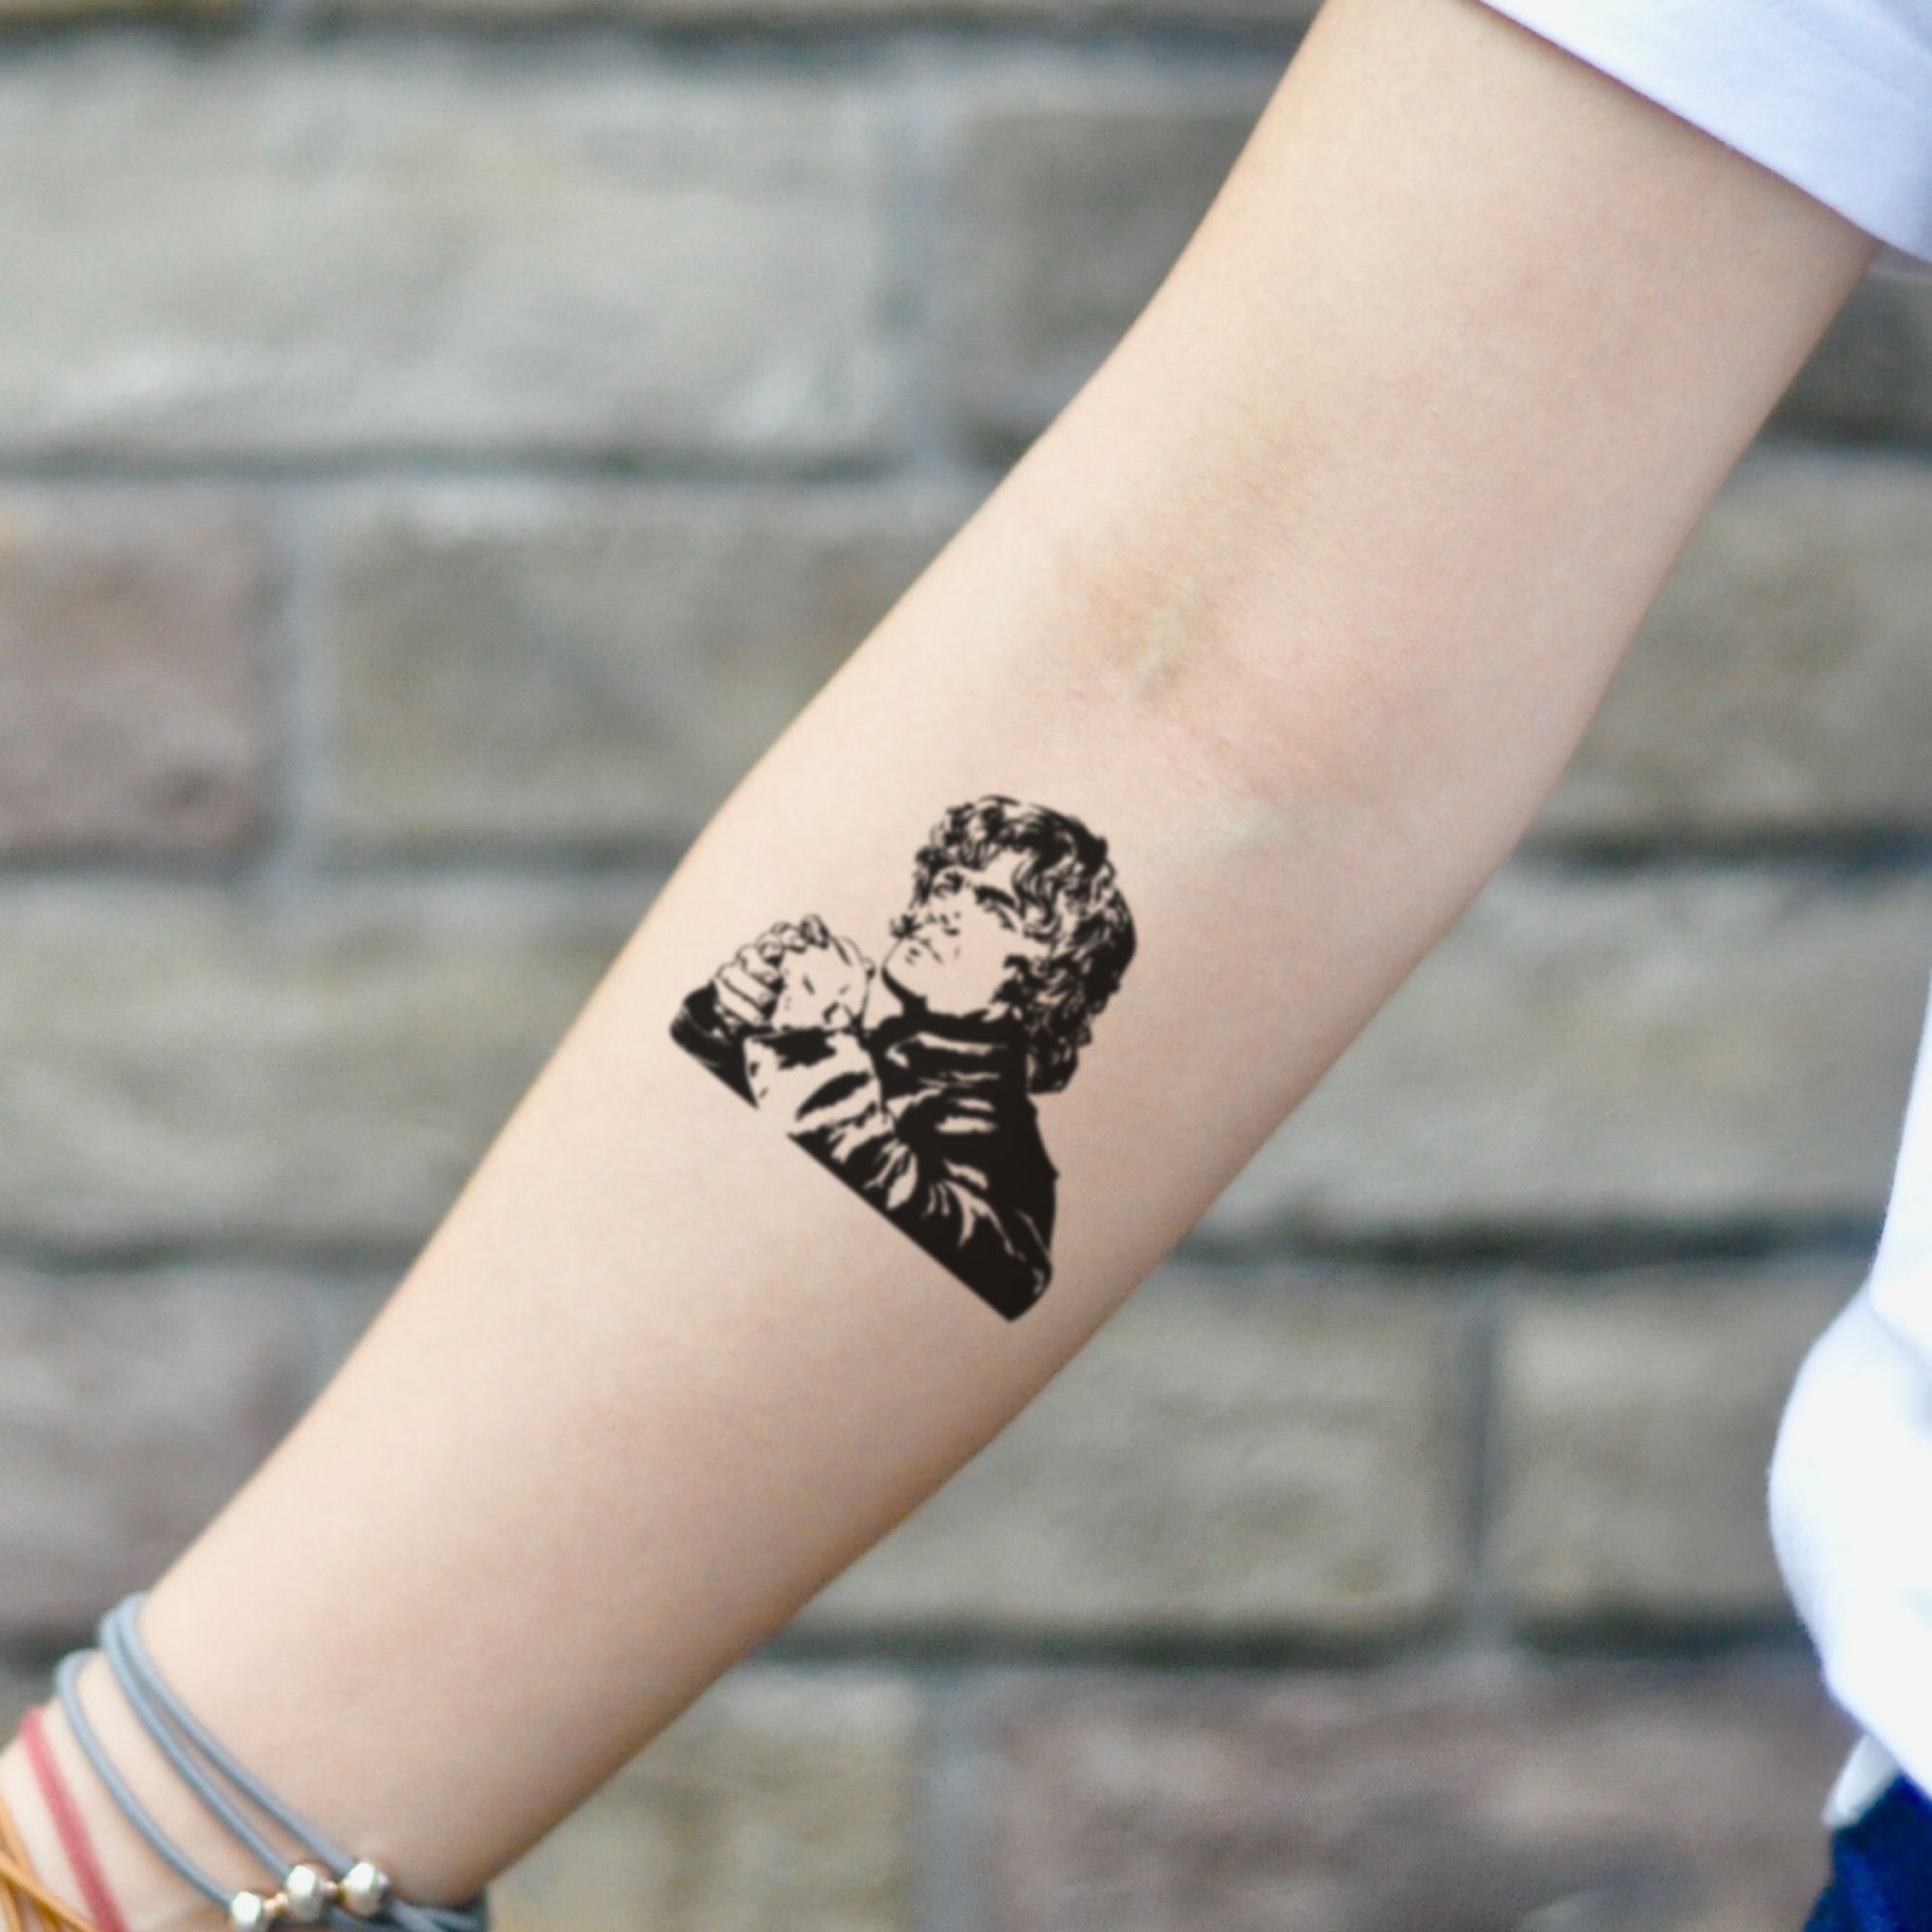 fake small tyrion lannister portrait temporary tattoo sticker design idea on inner arm